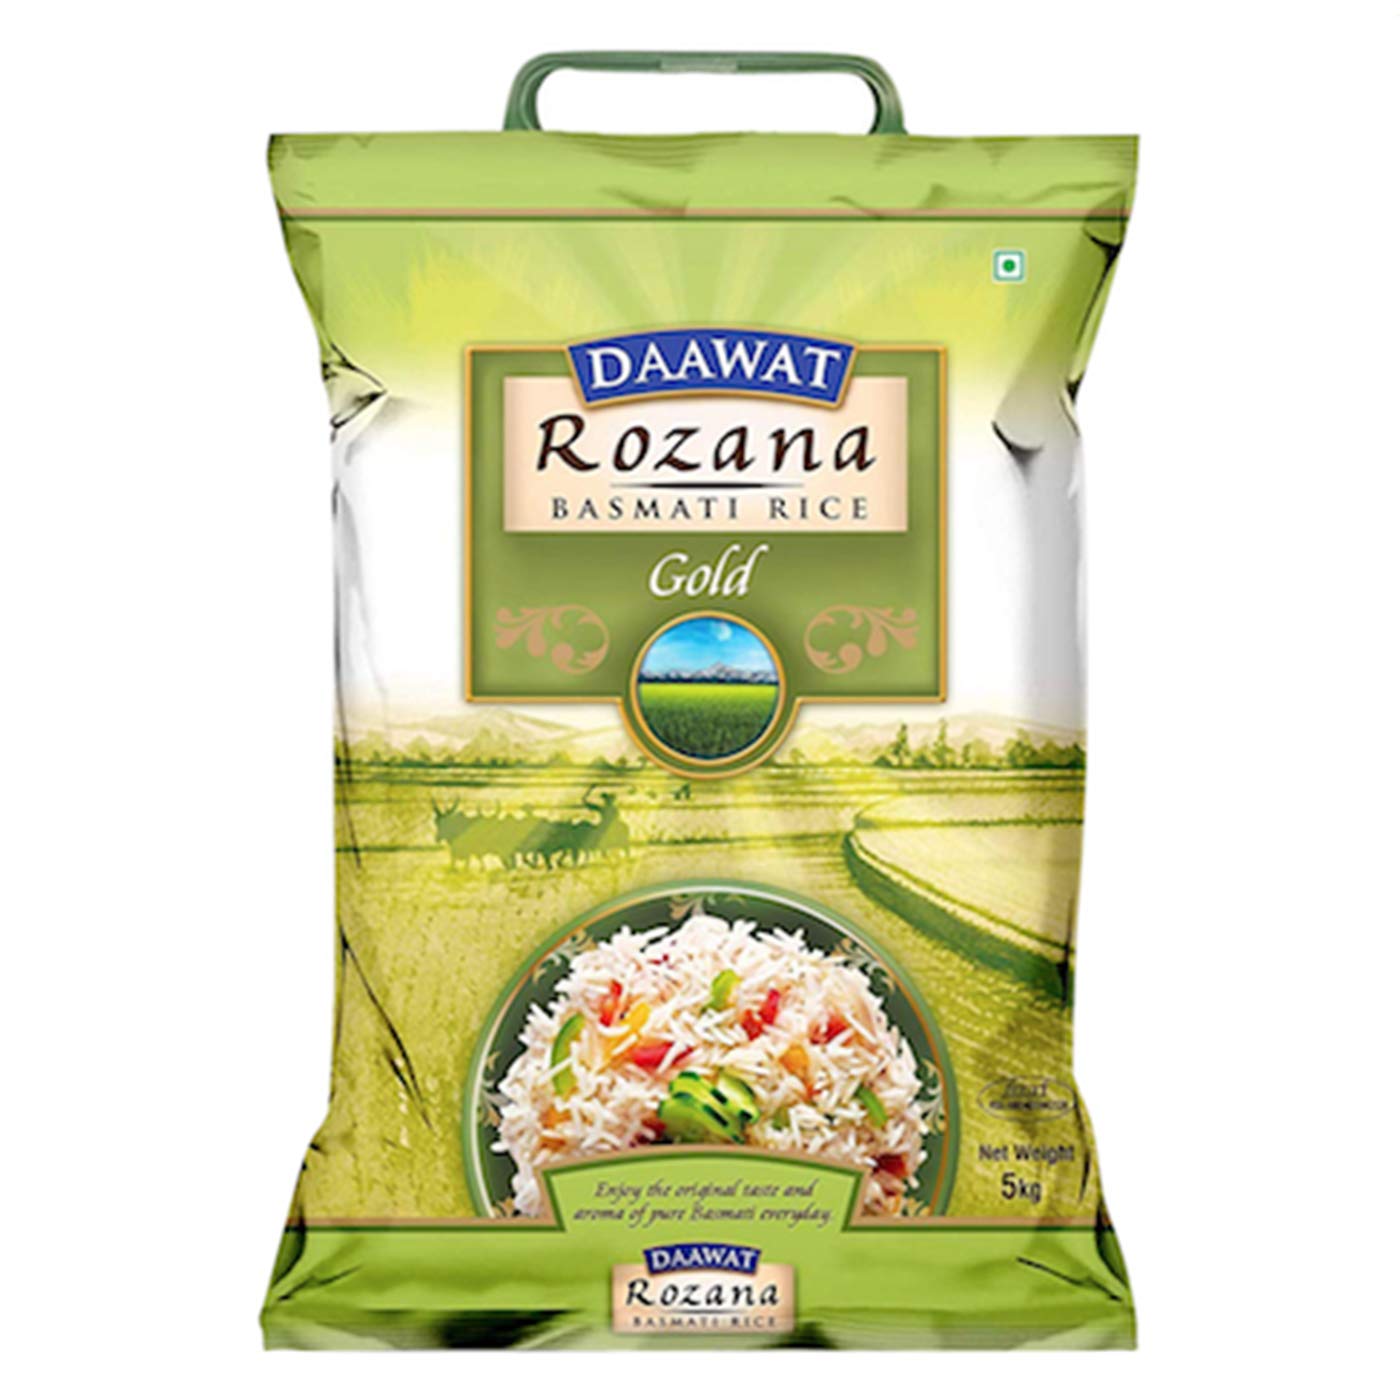 Daawat Rozana Basmati Rice Gold 5 kg